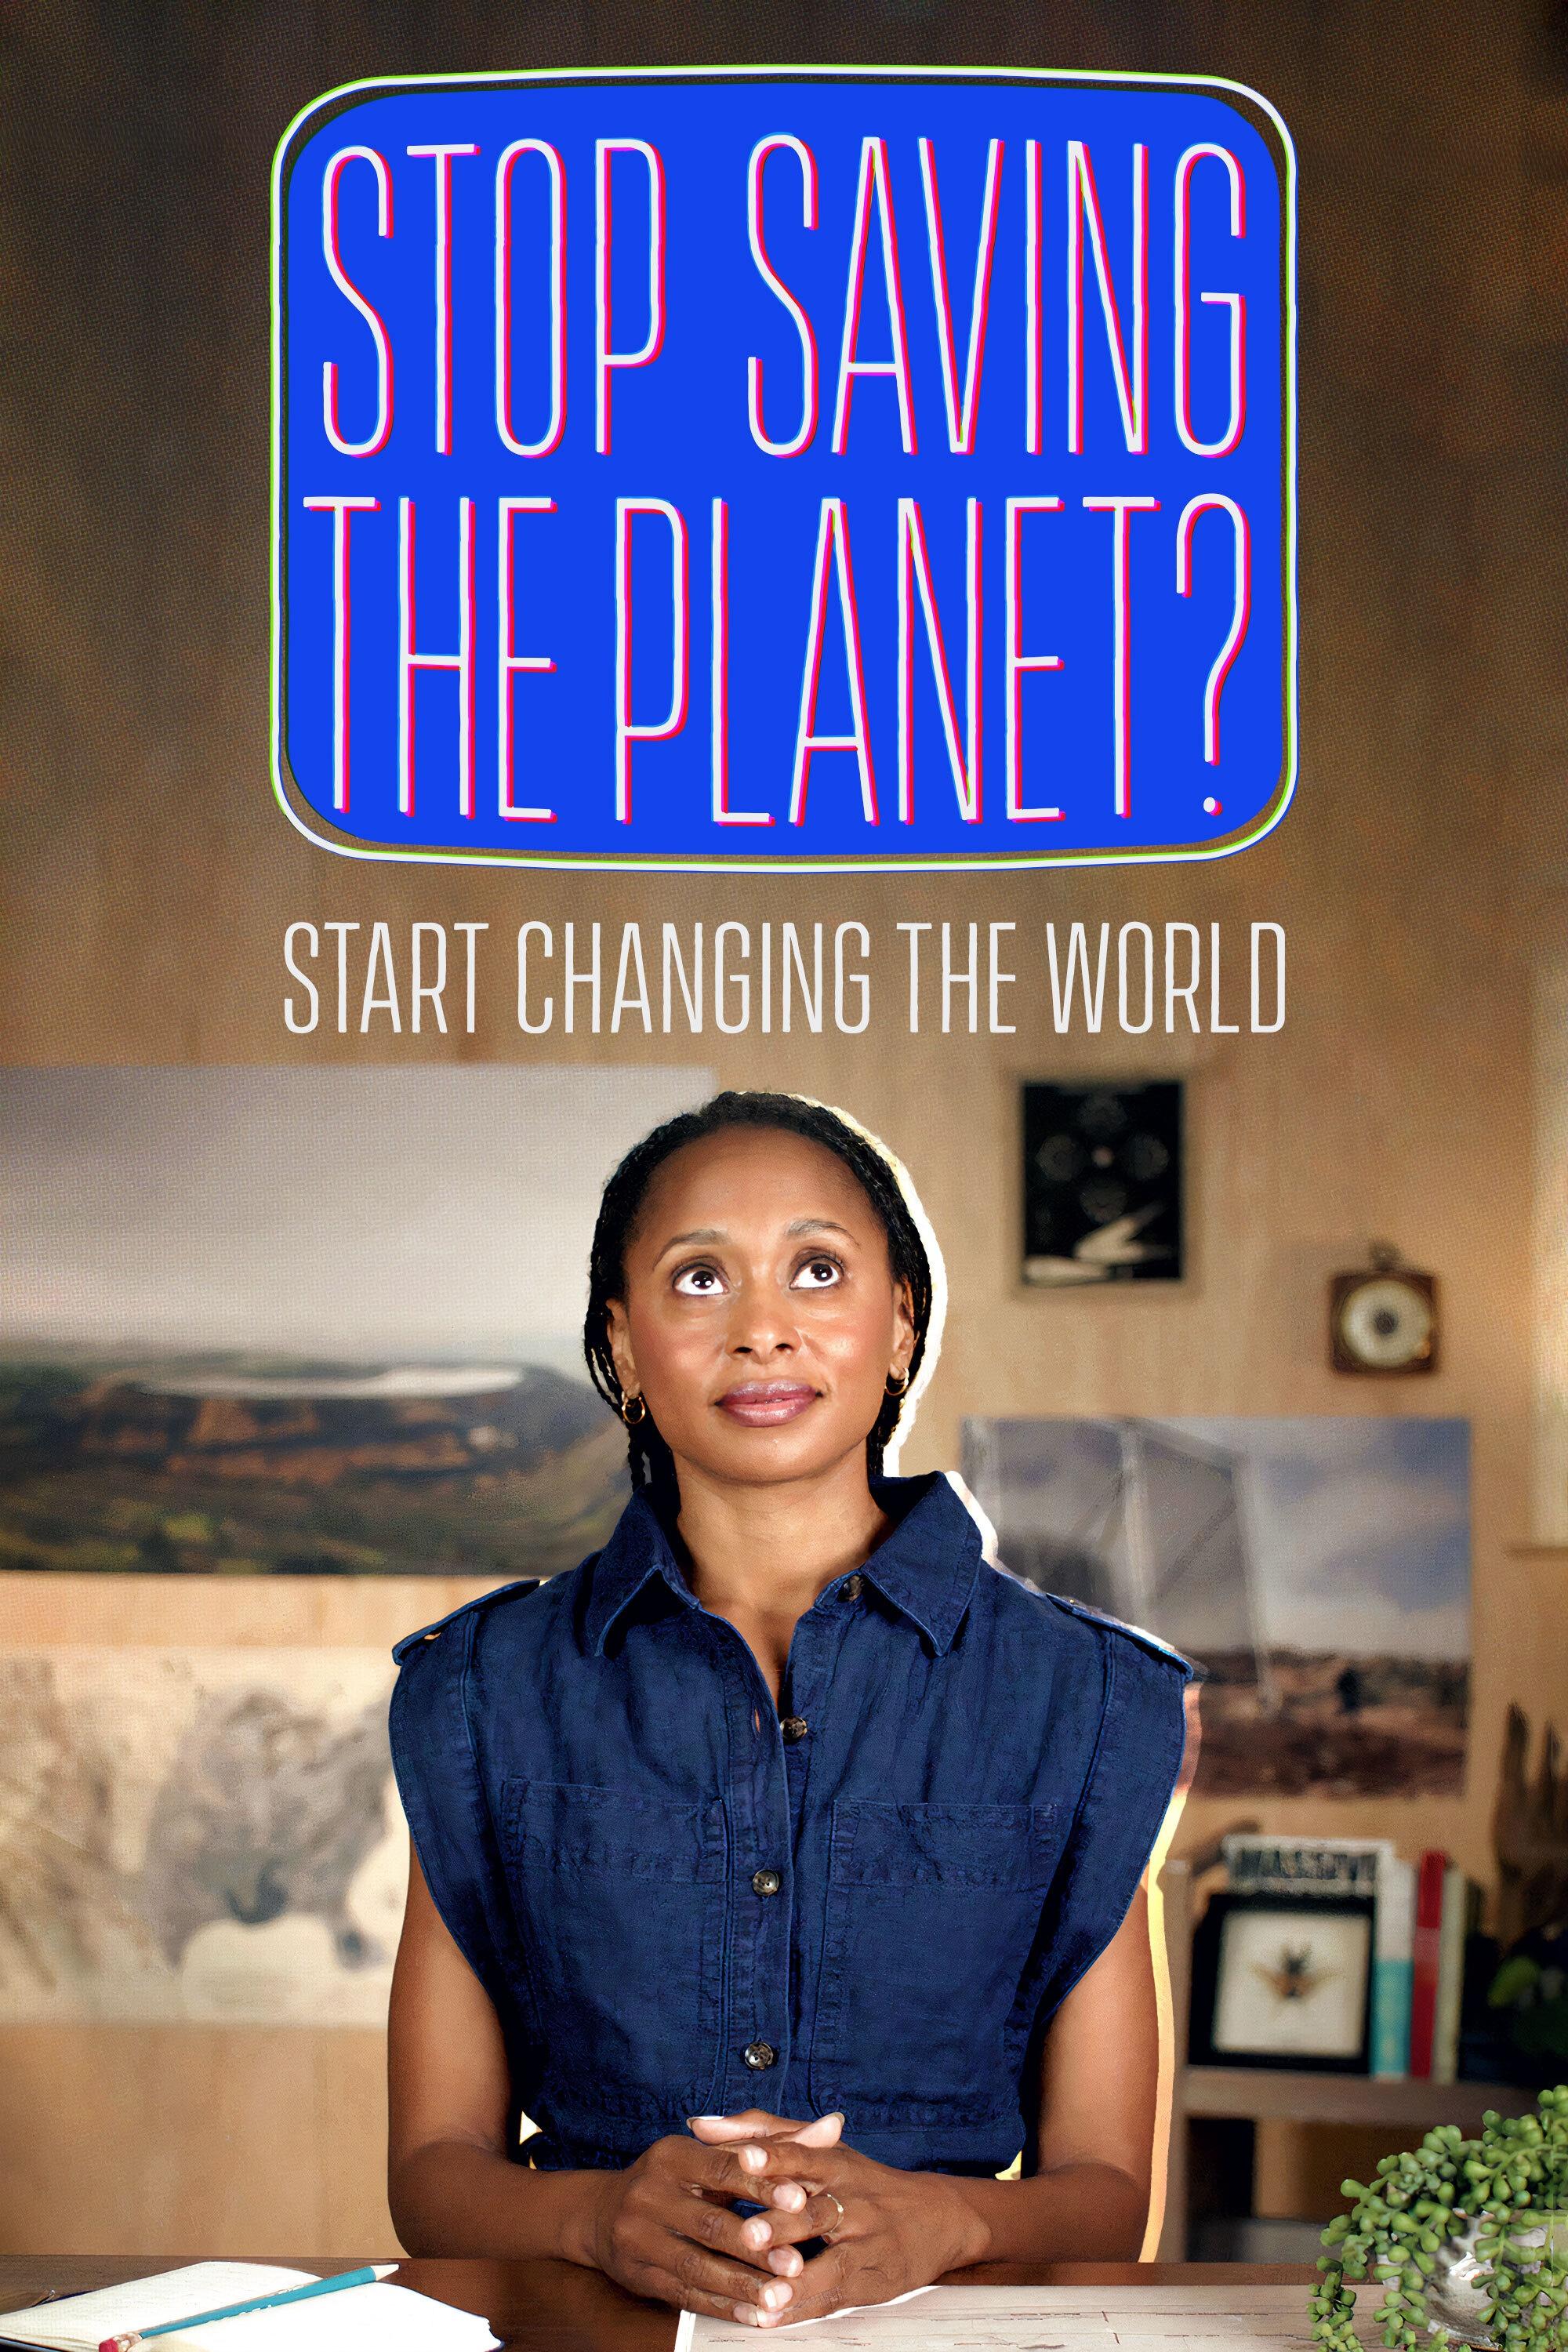 Stop Saving the Planet?